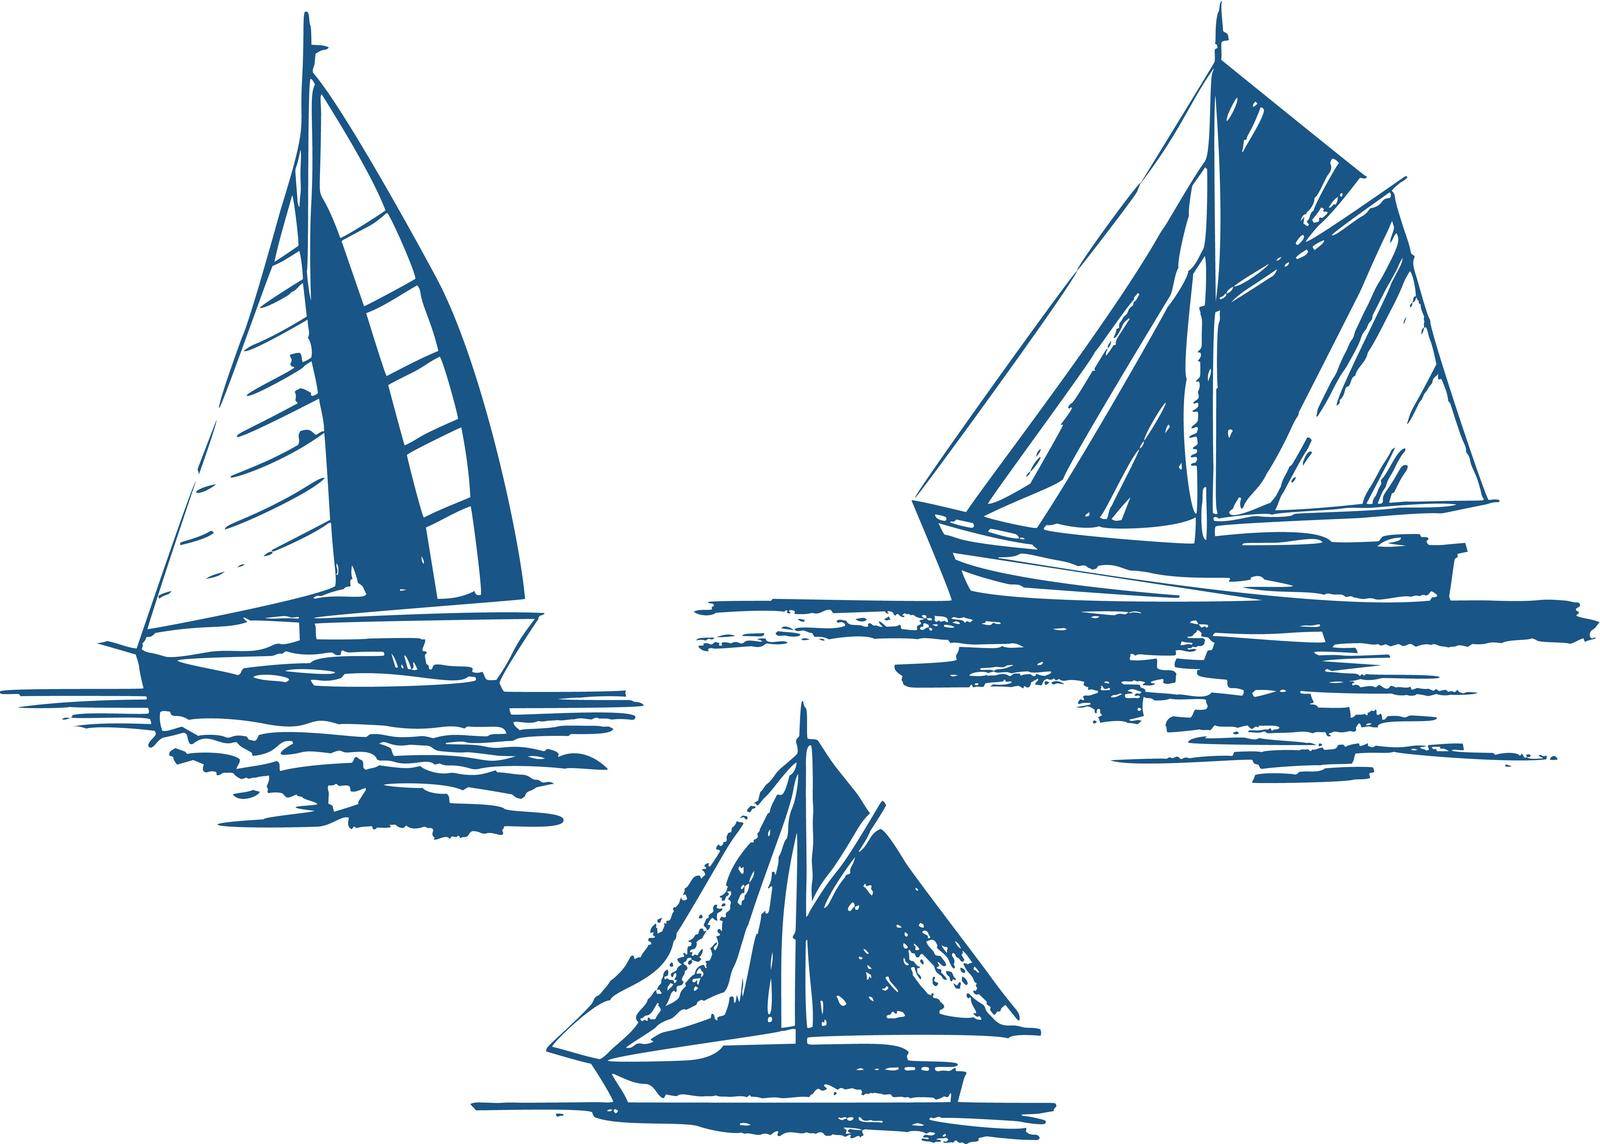 Sailing yachts bundle by roman79